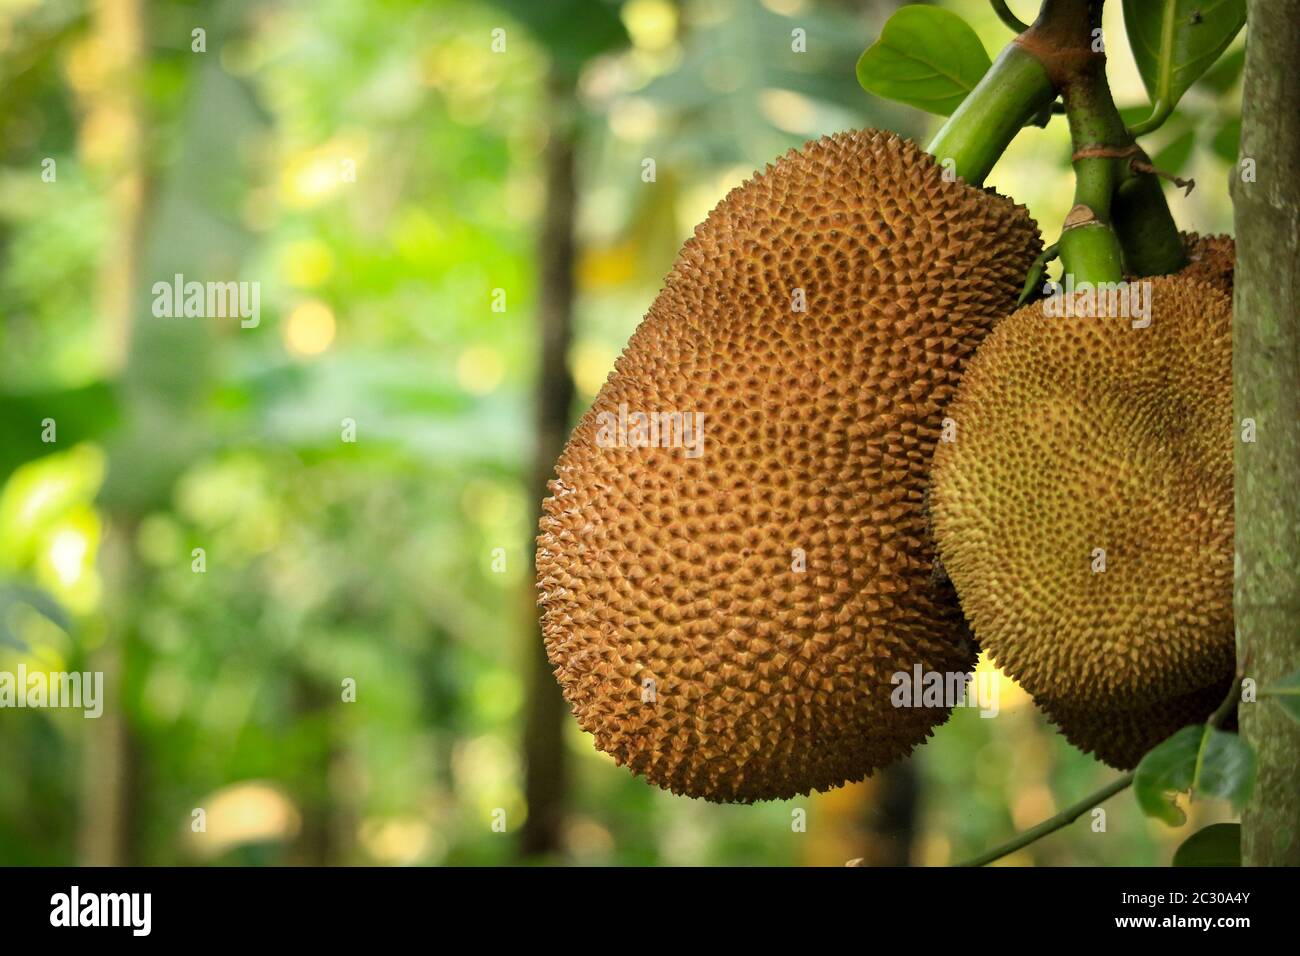 The jackfruit tree and the young jackfruit look so beautiful Stock Photo